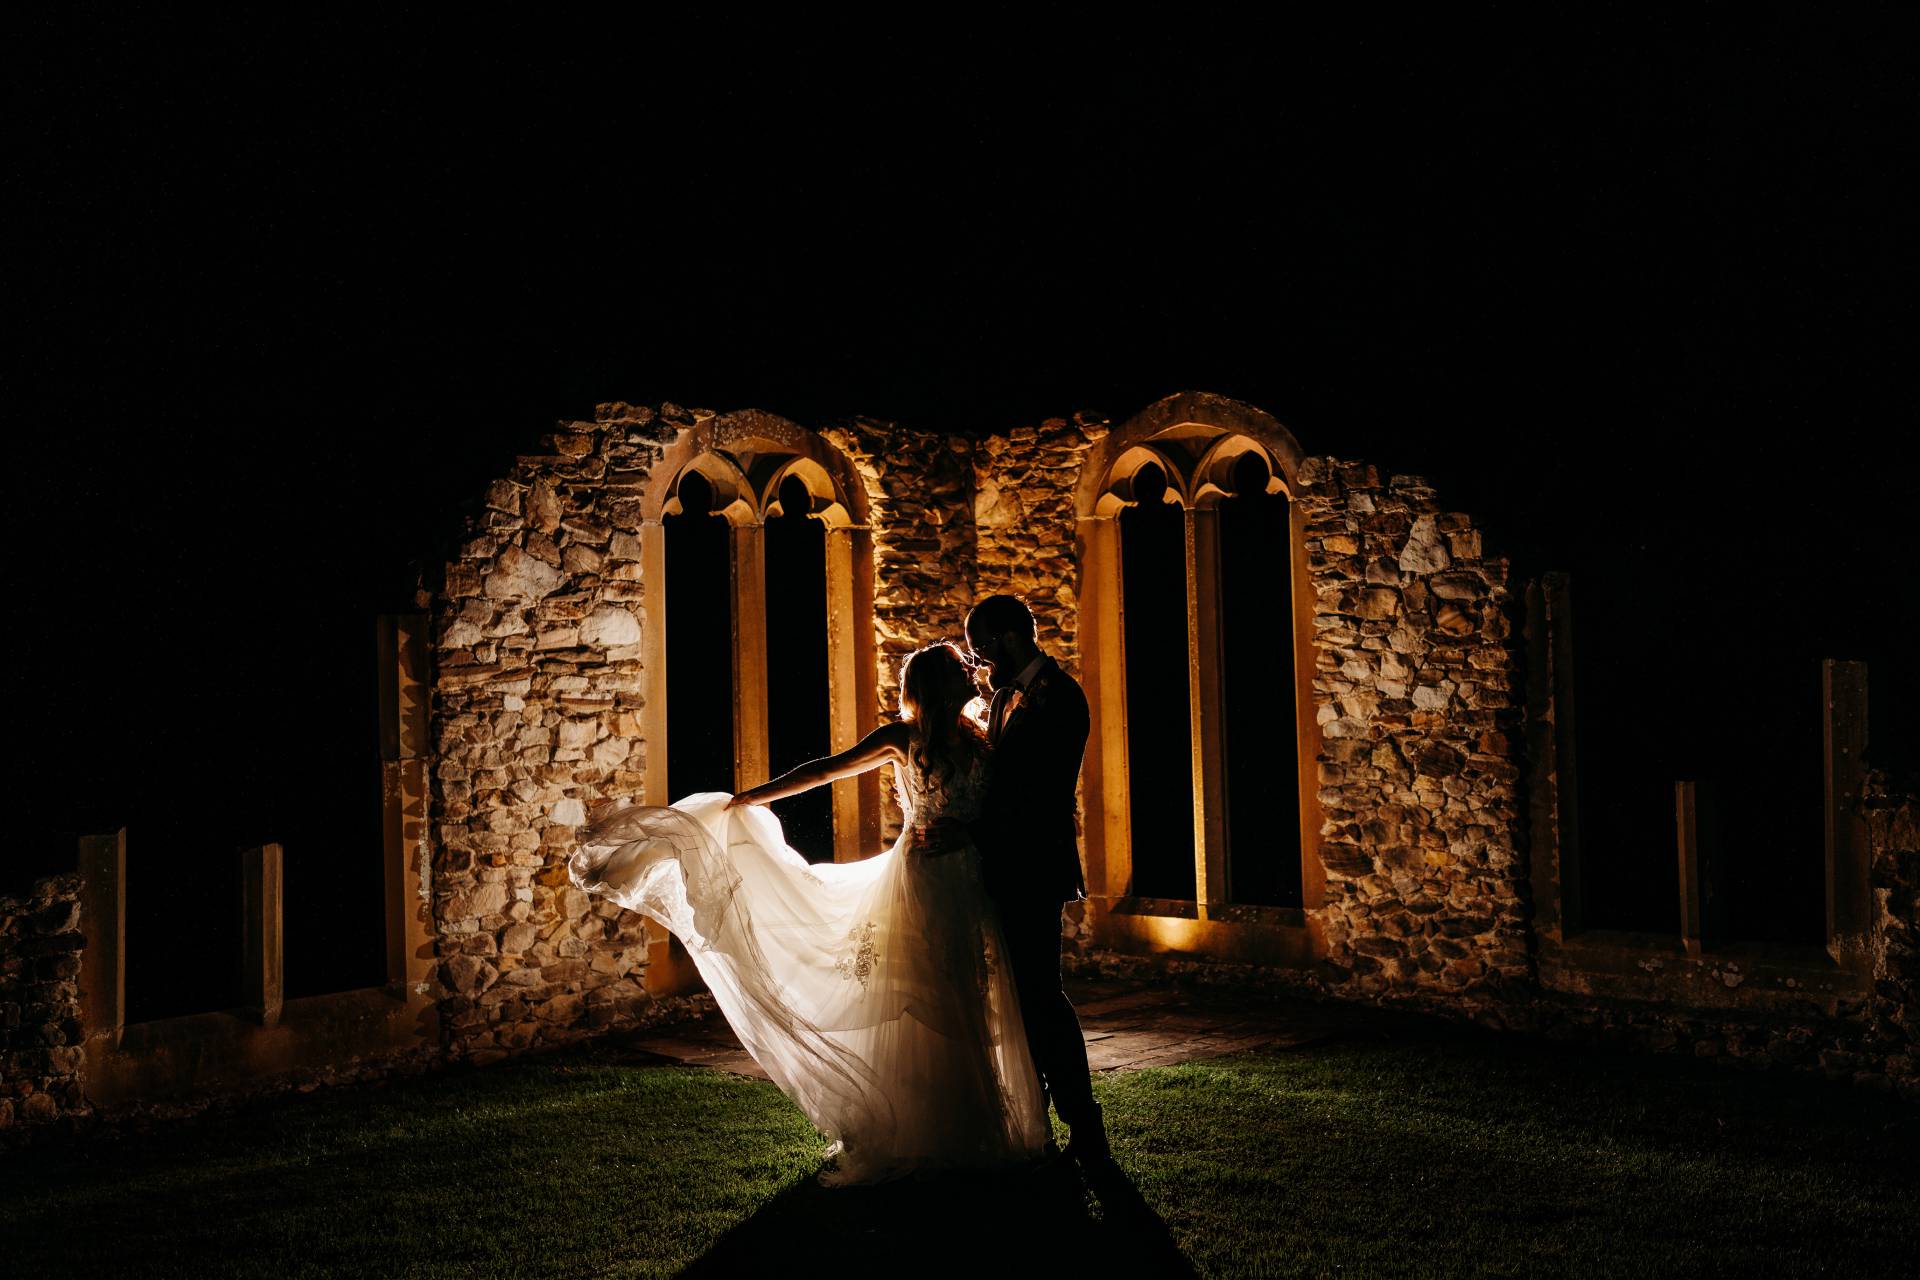 night shot of rustic ruins wedding ceremony location